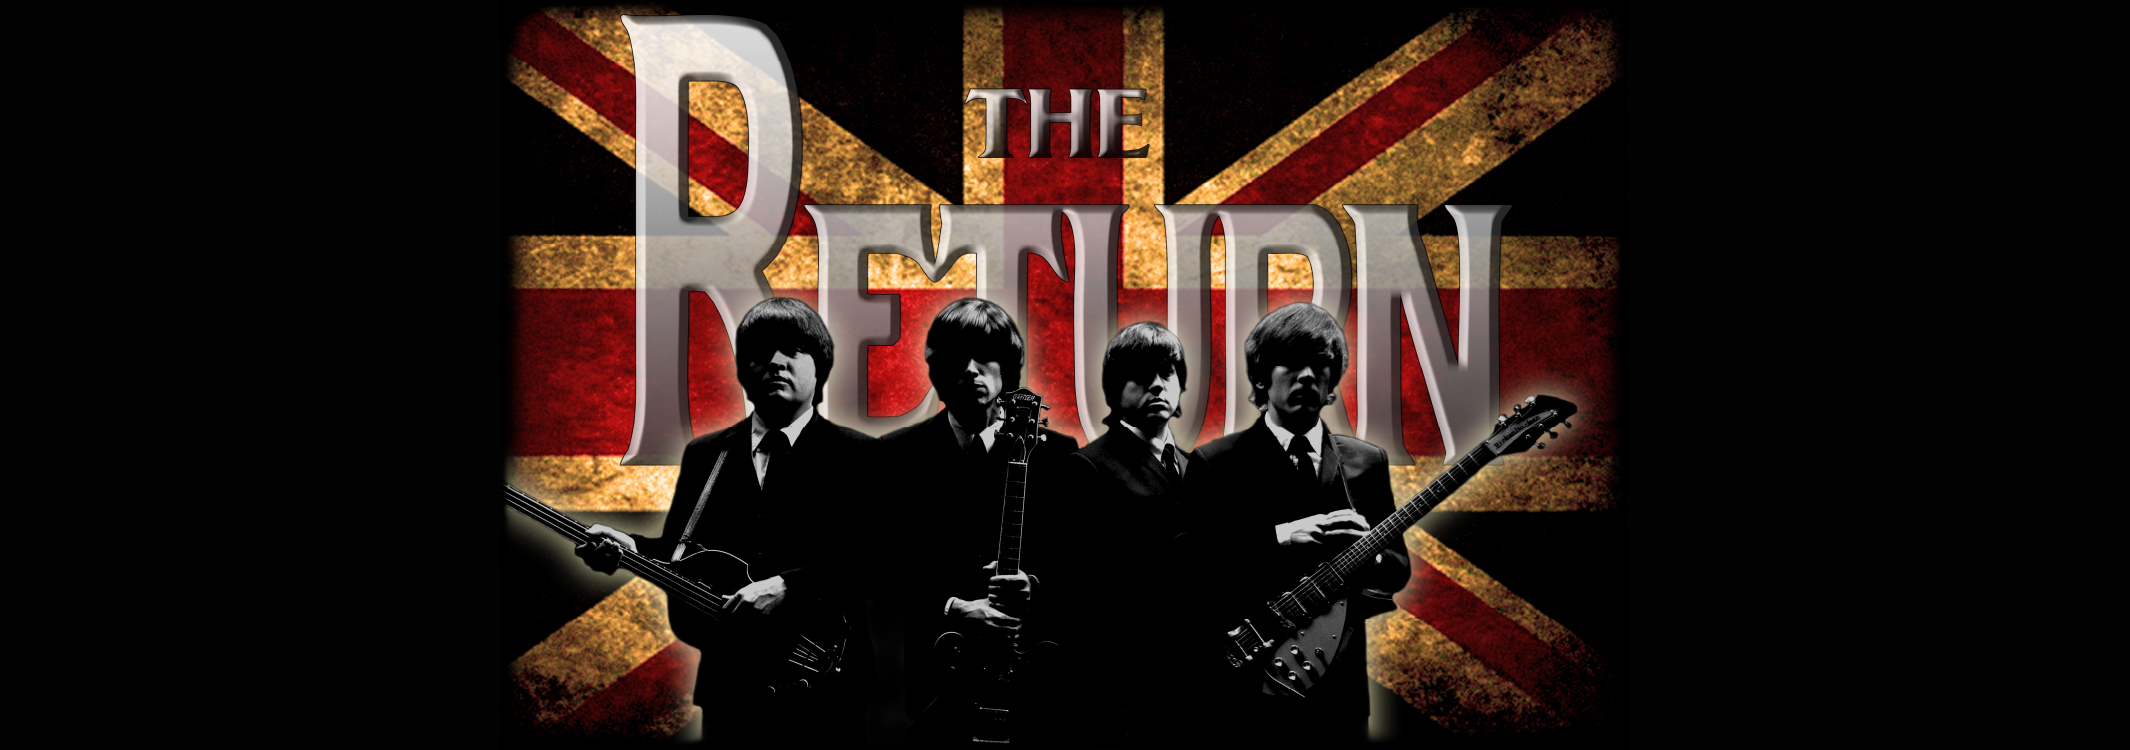 The Return – Beatles Tribute